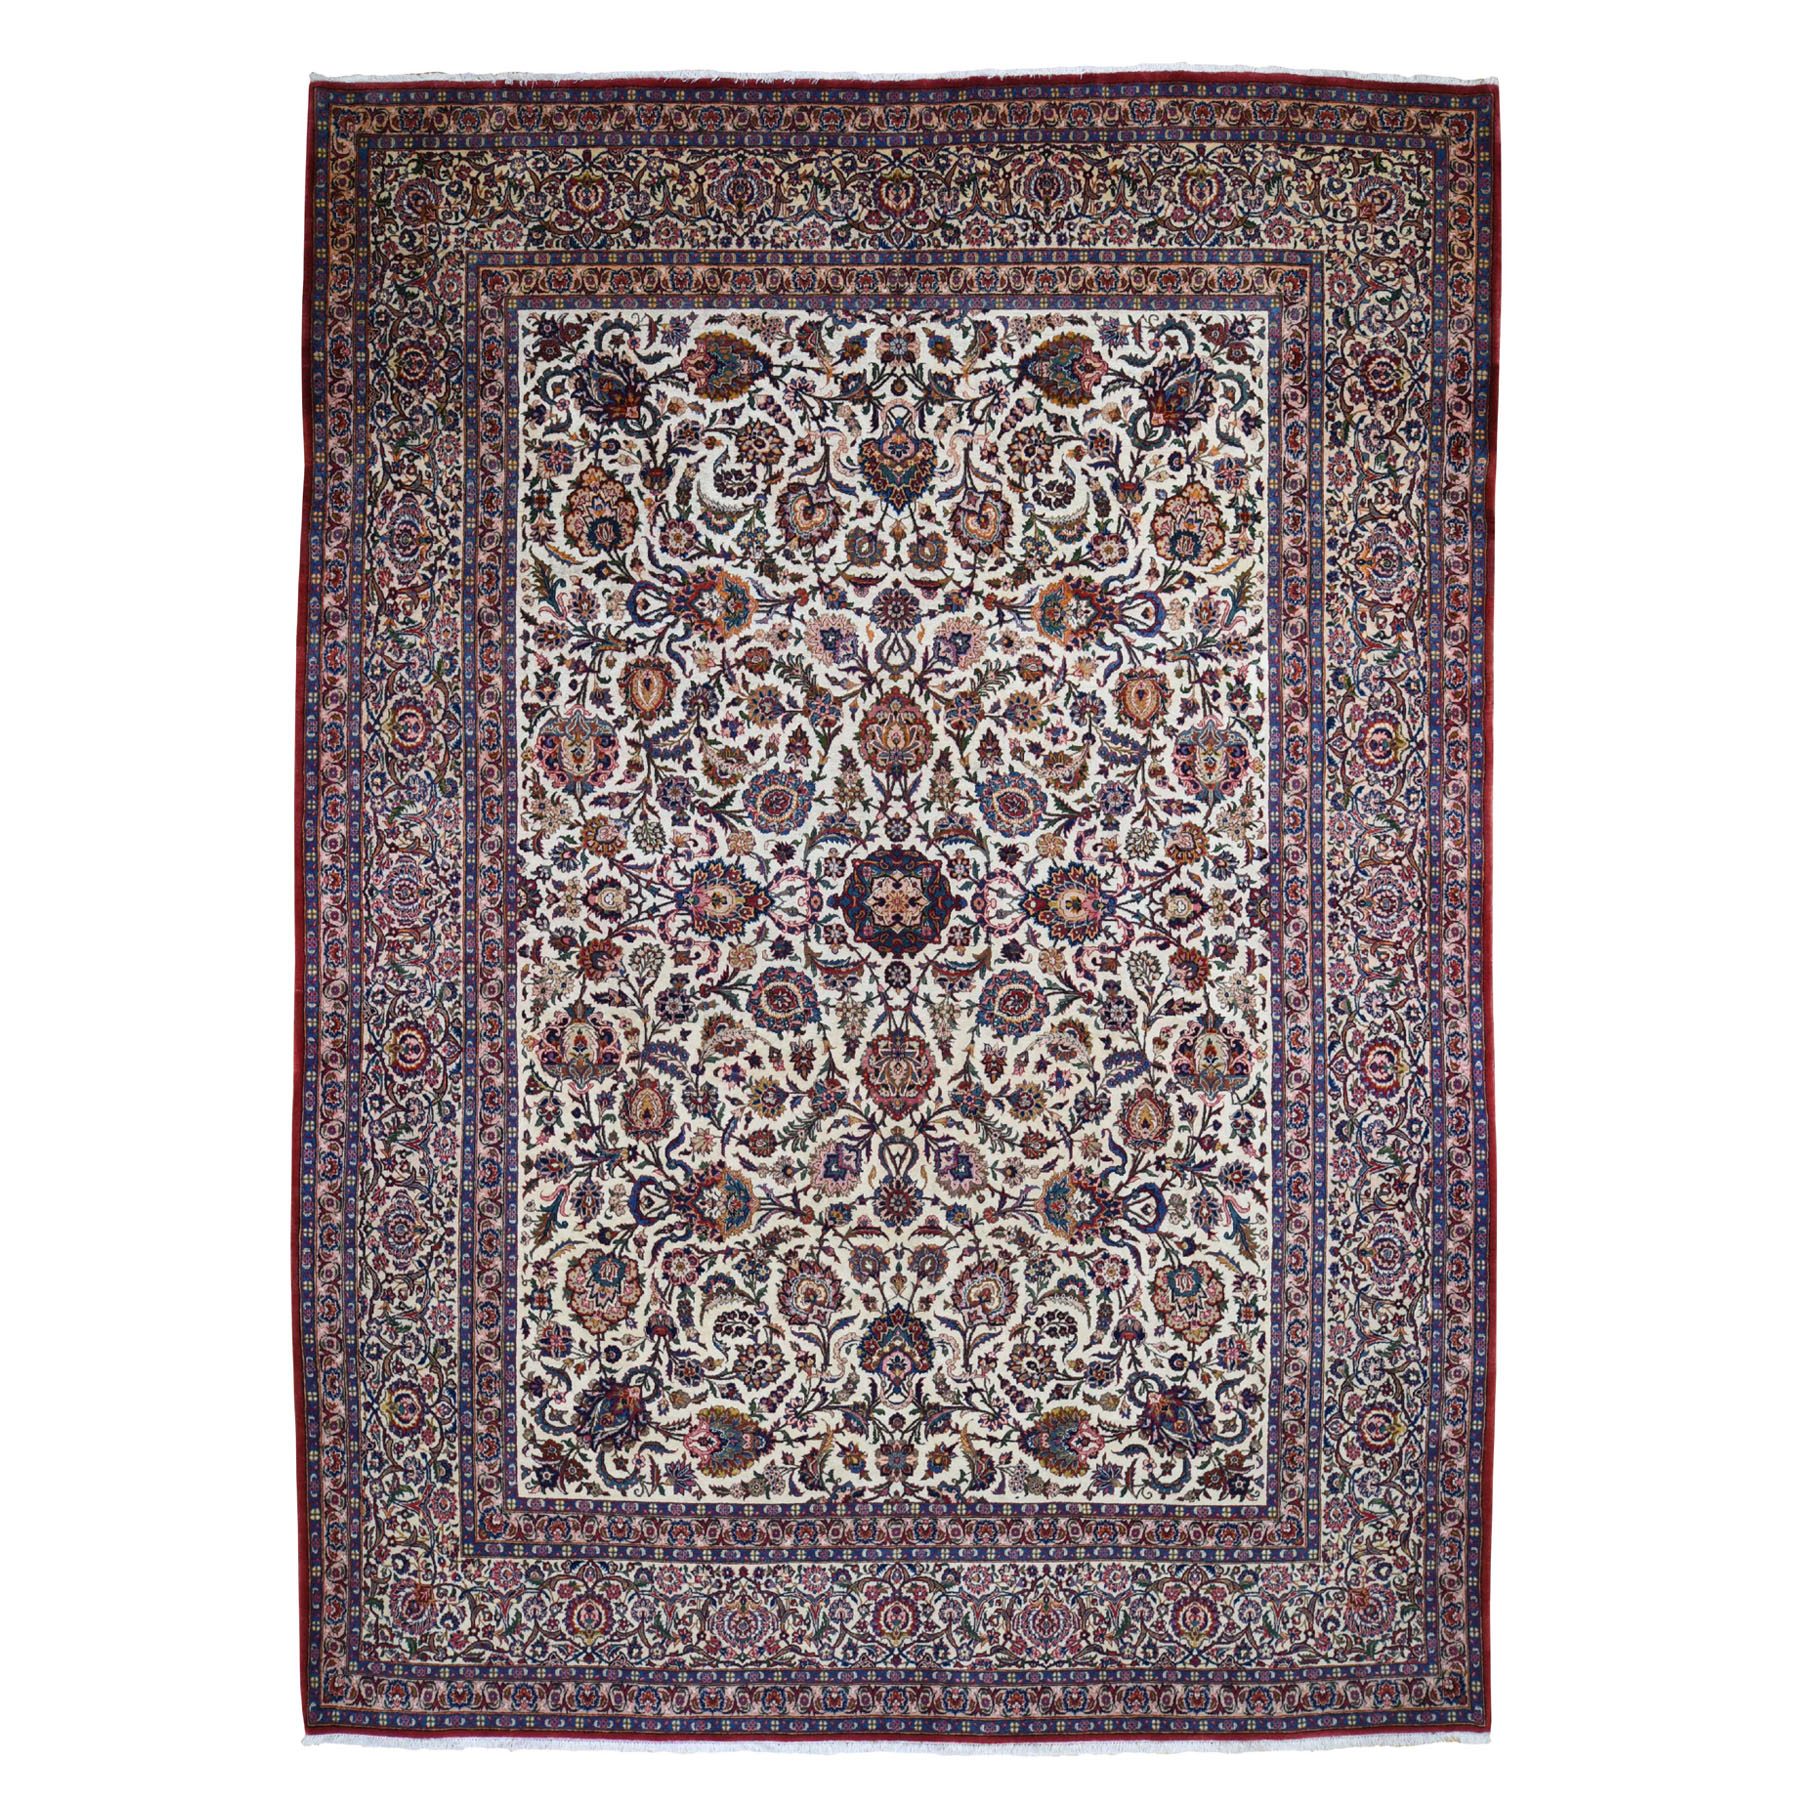 antique rugs LUV429309